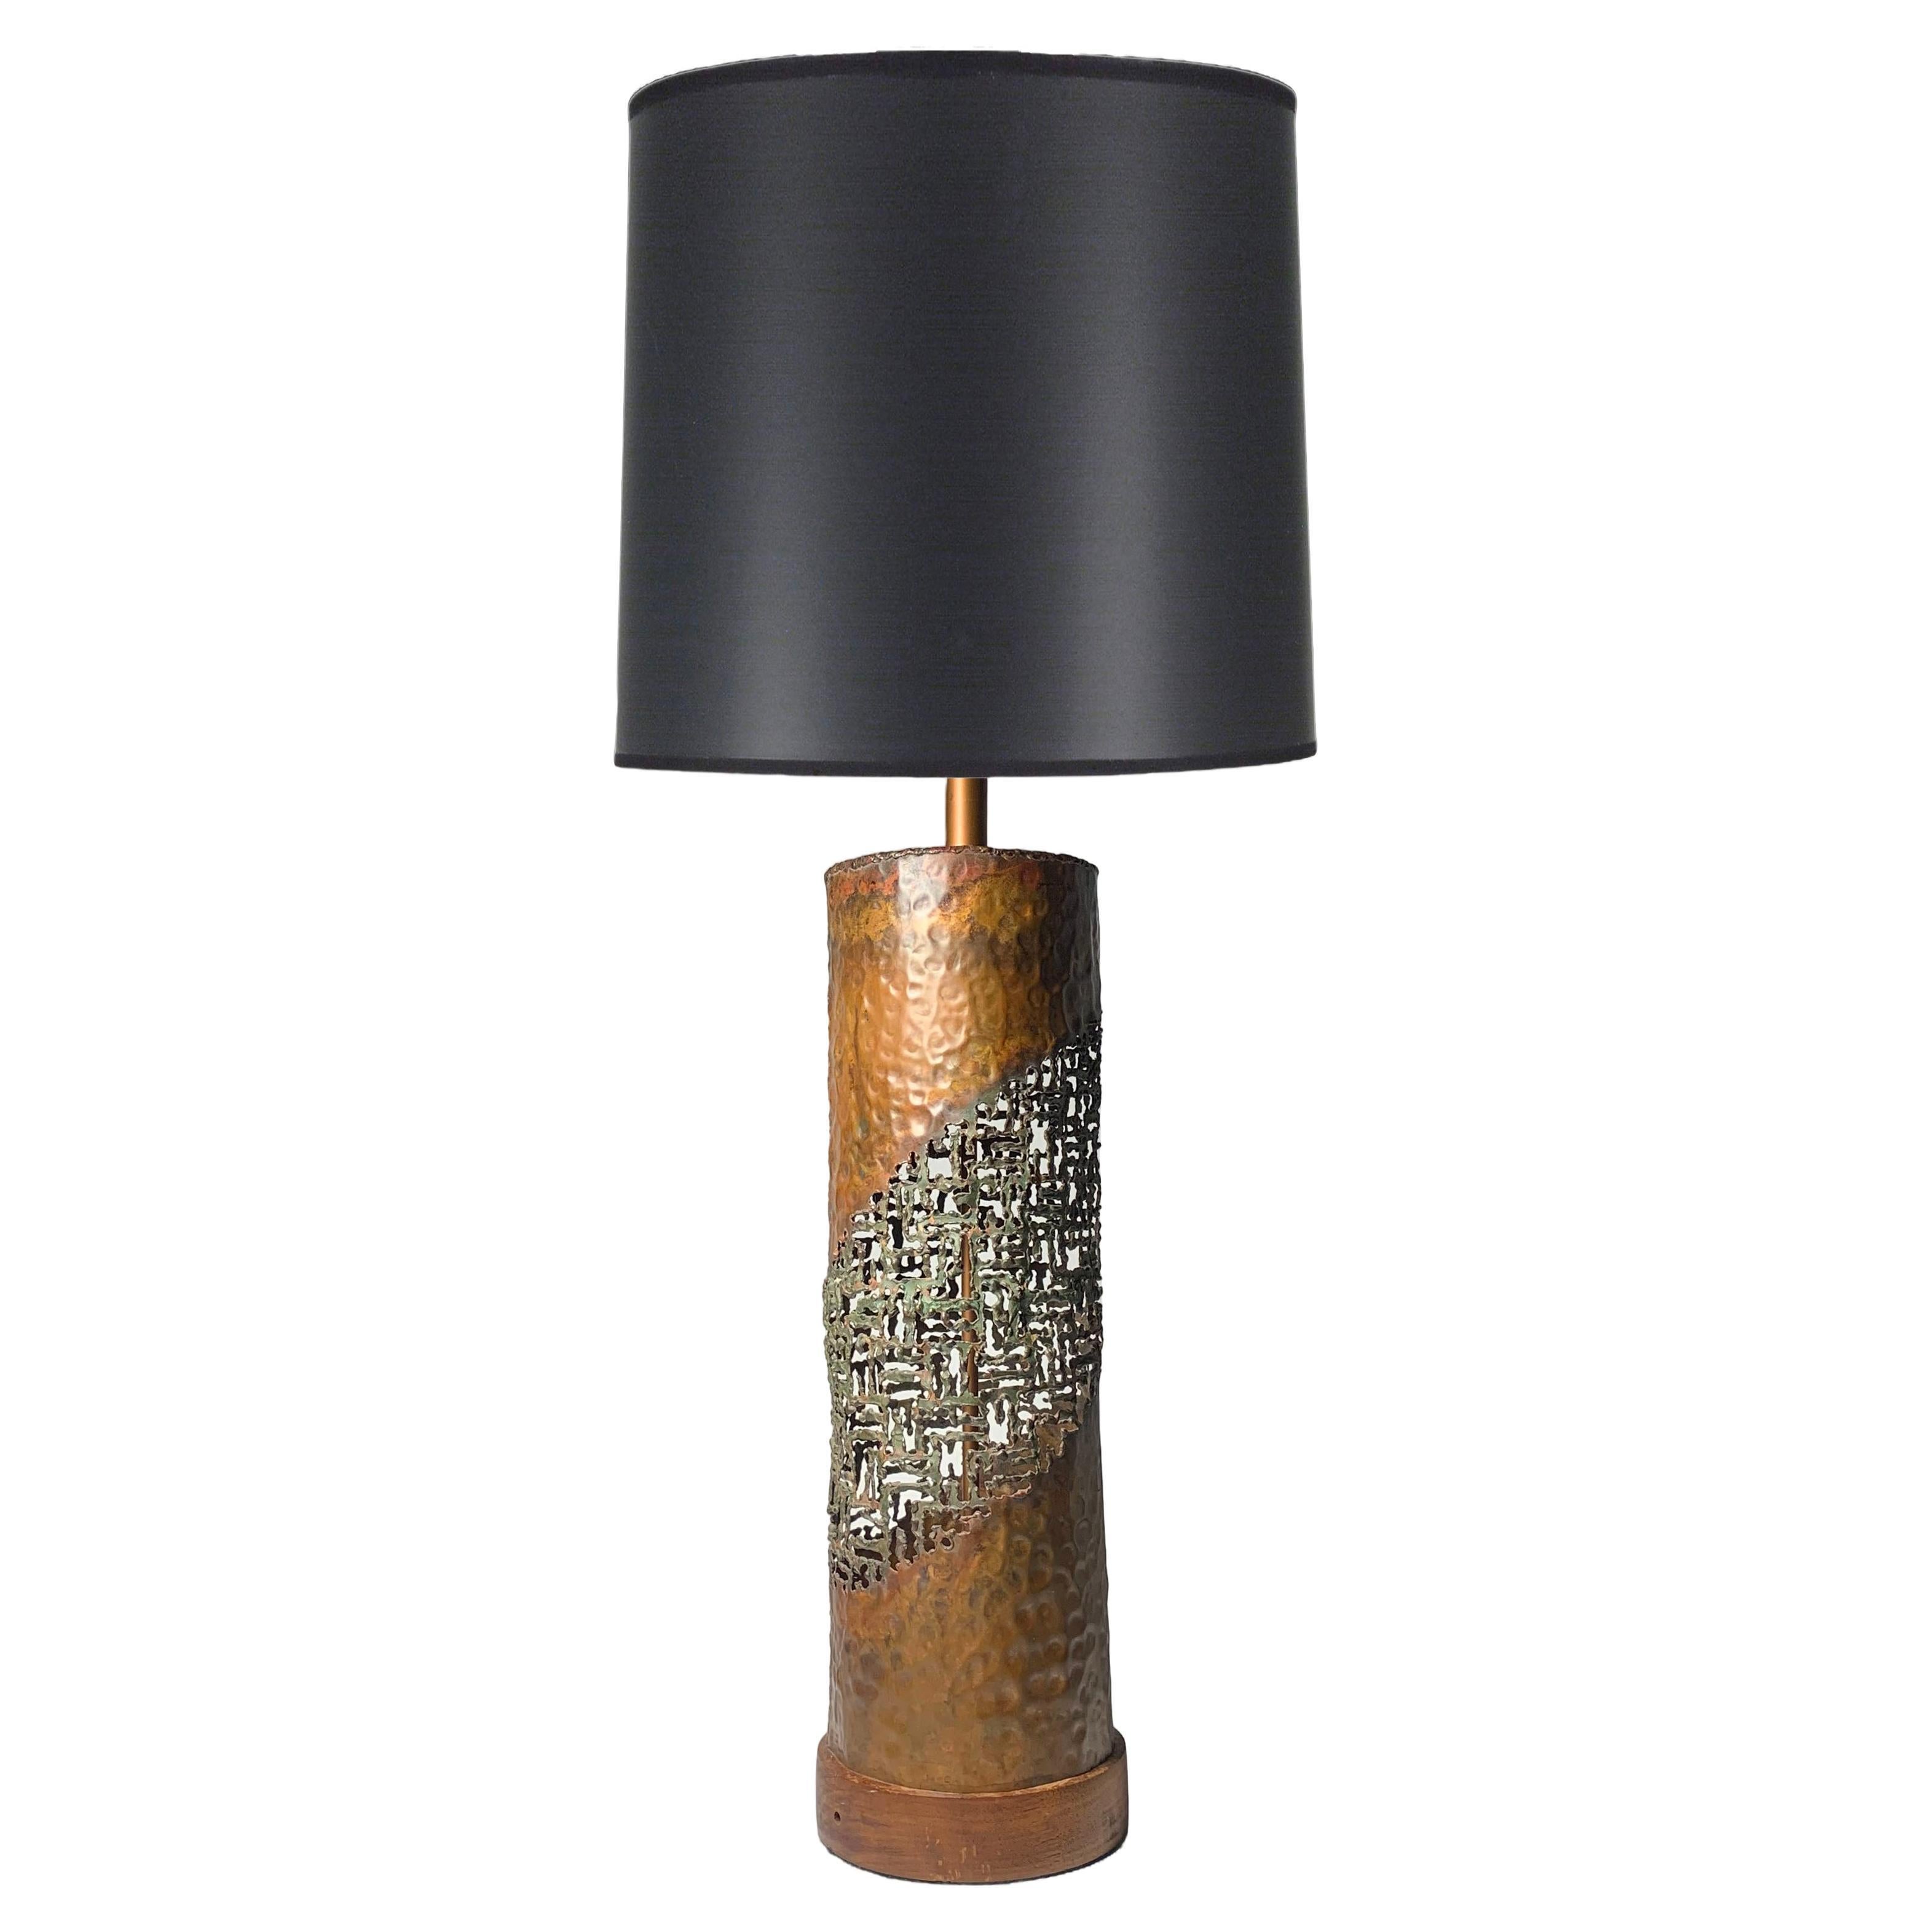 Marcello Fantoni for Raymor Copper Torch-Cut Table Lamp